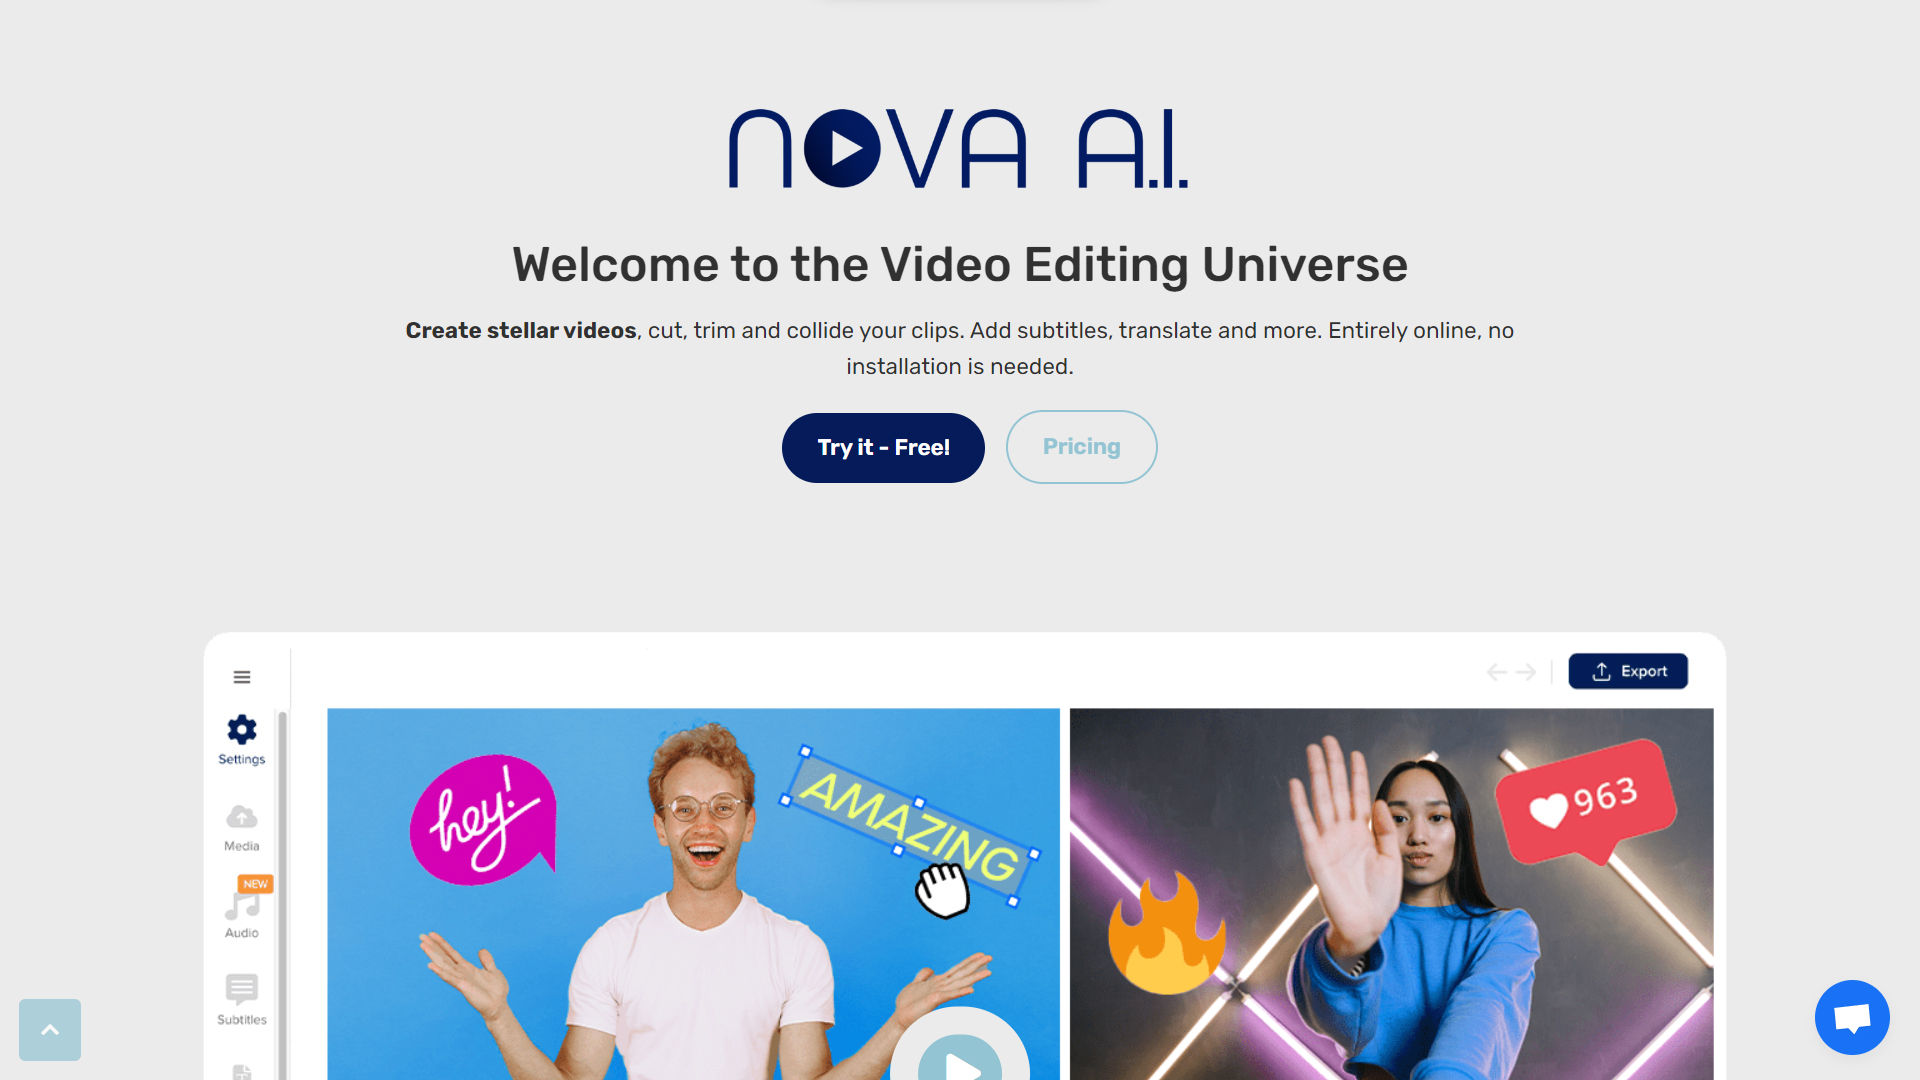 Nova A.I - The Ultimate Online Video Editor